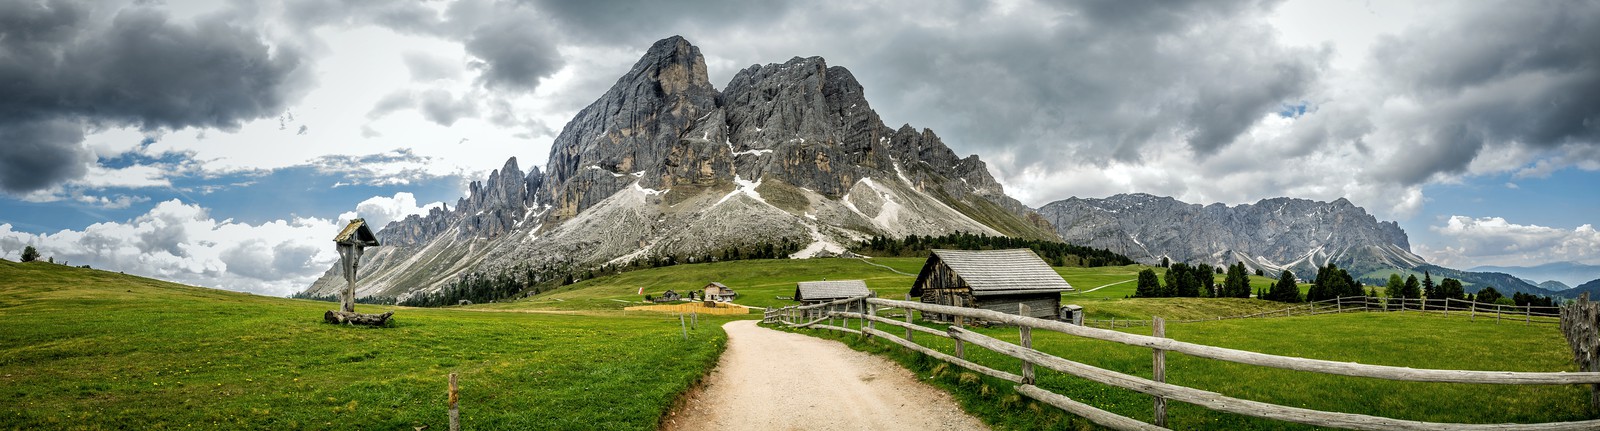 Original unprocessed panoramic photo with mountainous landscape